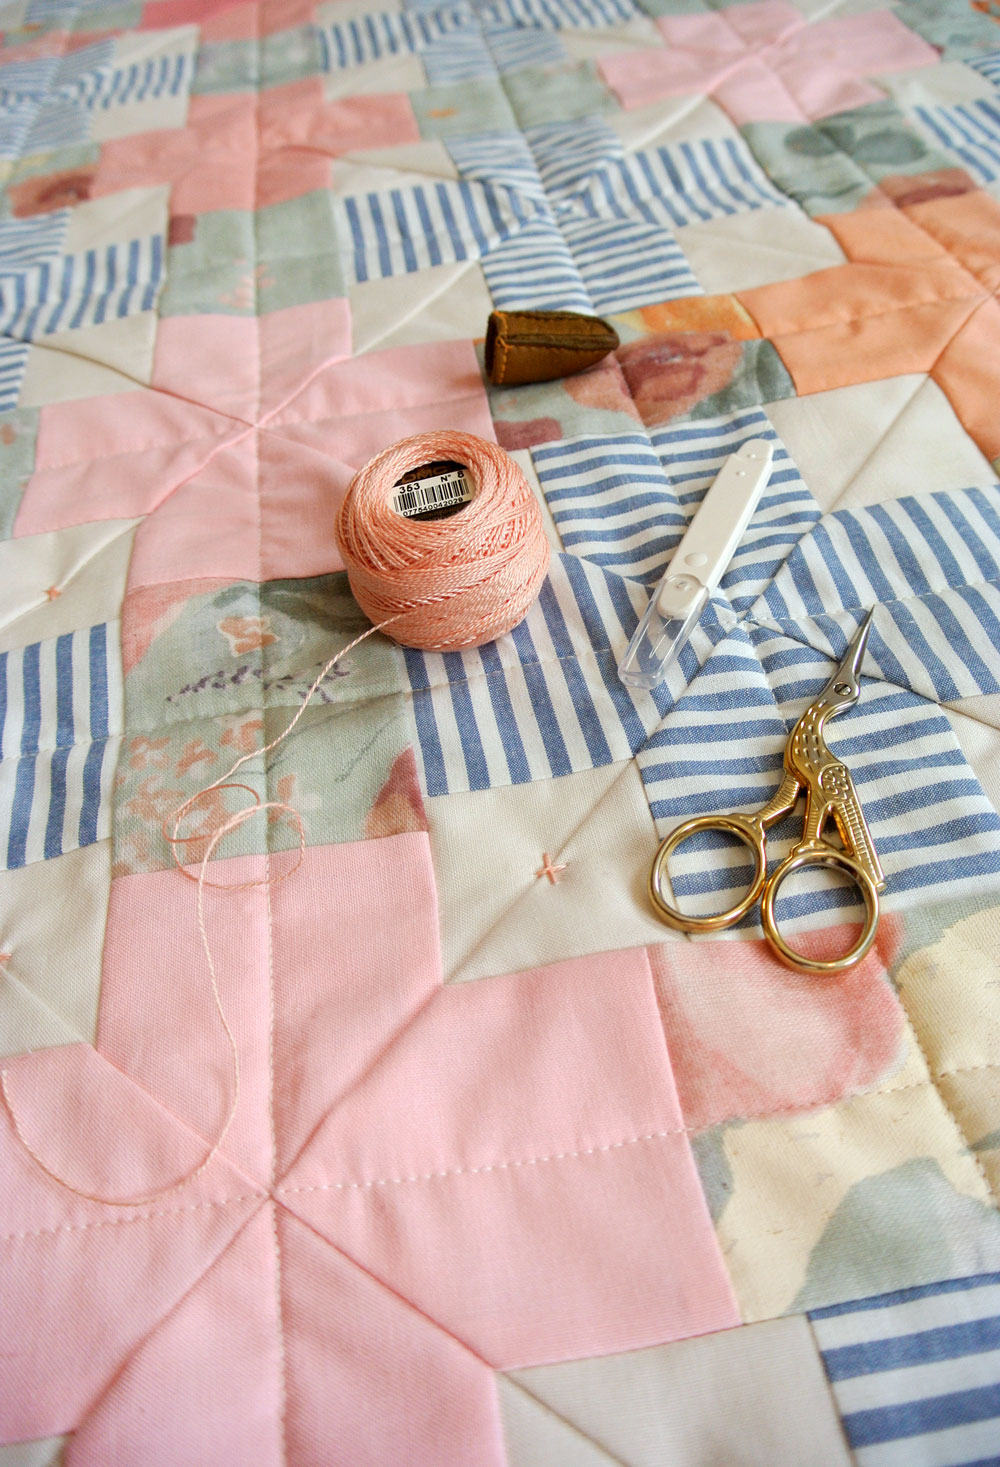 How to tie a quilt with a modern twist! | Suzy Quilts https://suzyquilts.com/how-to-tie-a-quilt-with-a-modern-twist